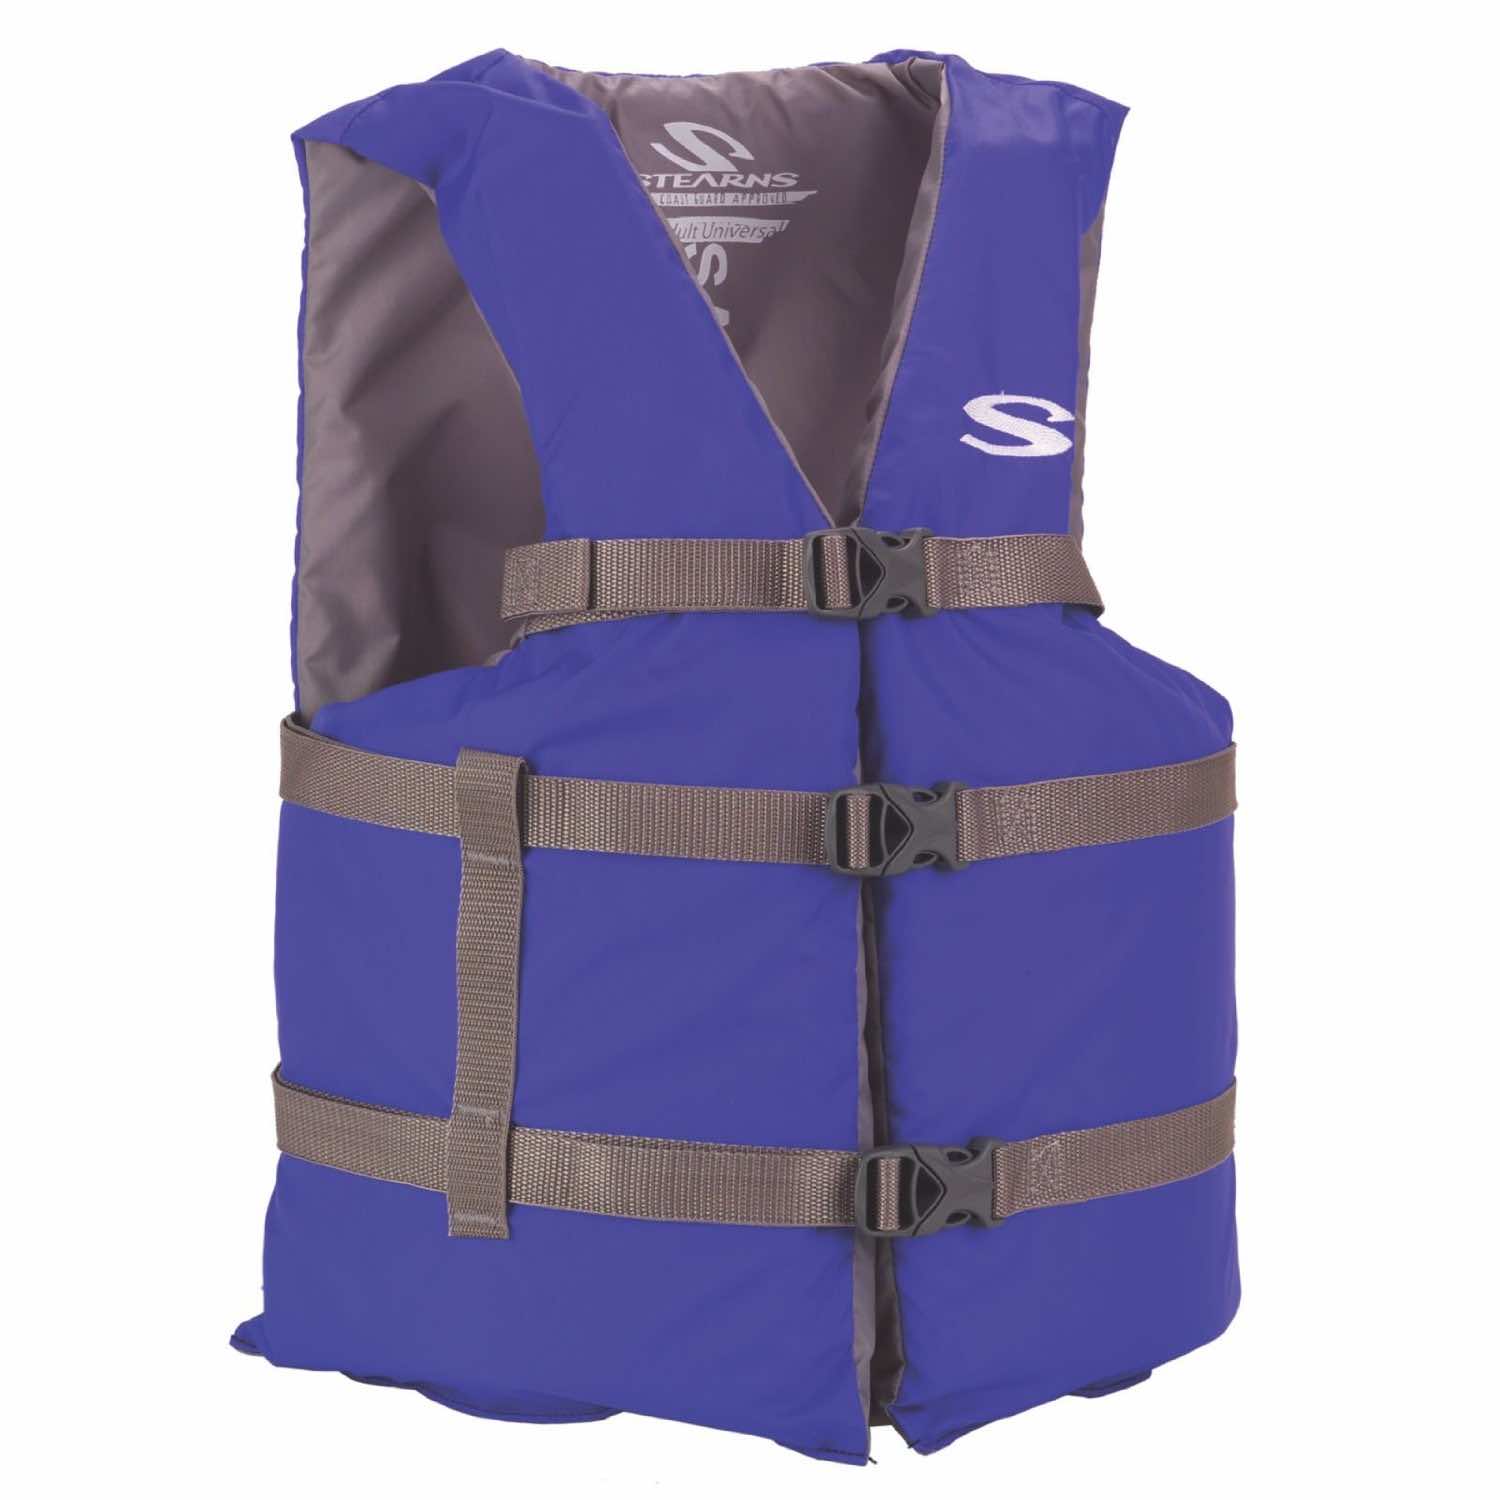 best life jacket for travel